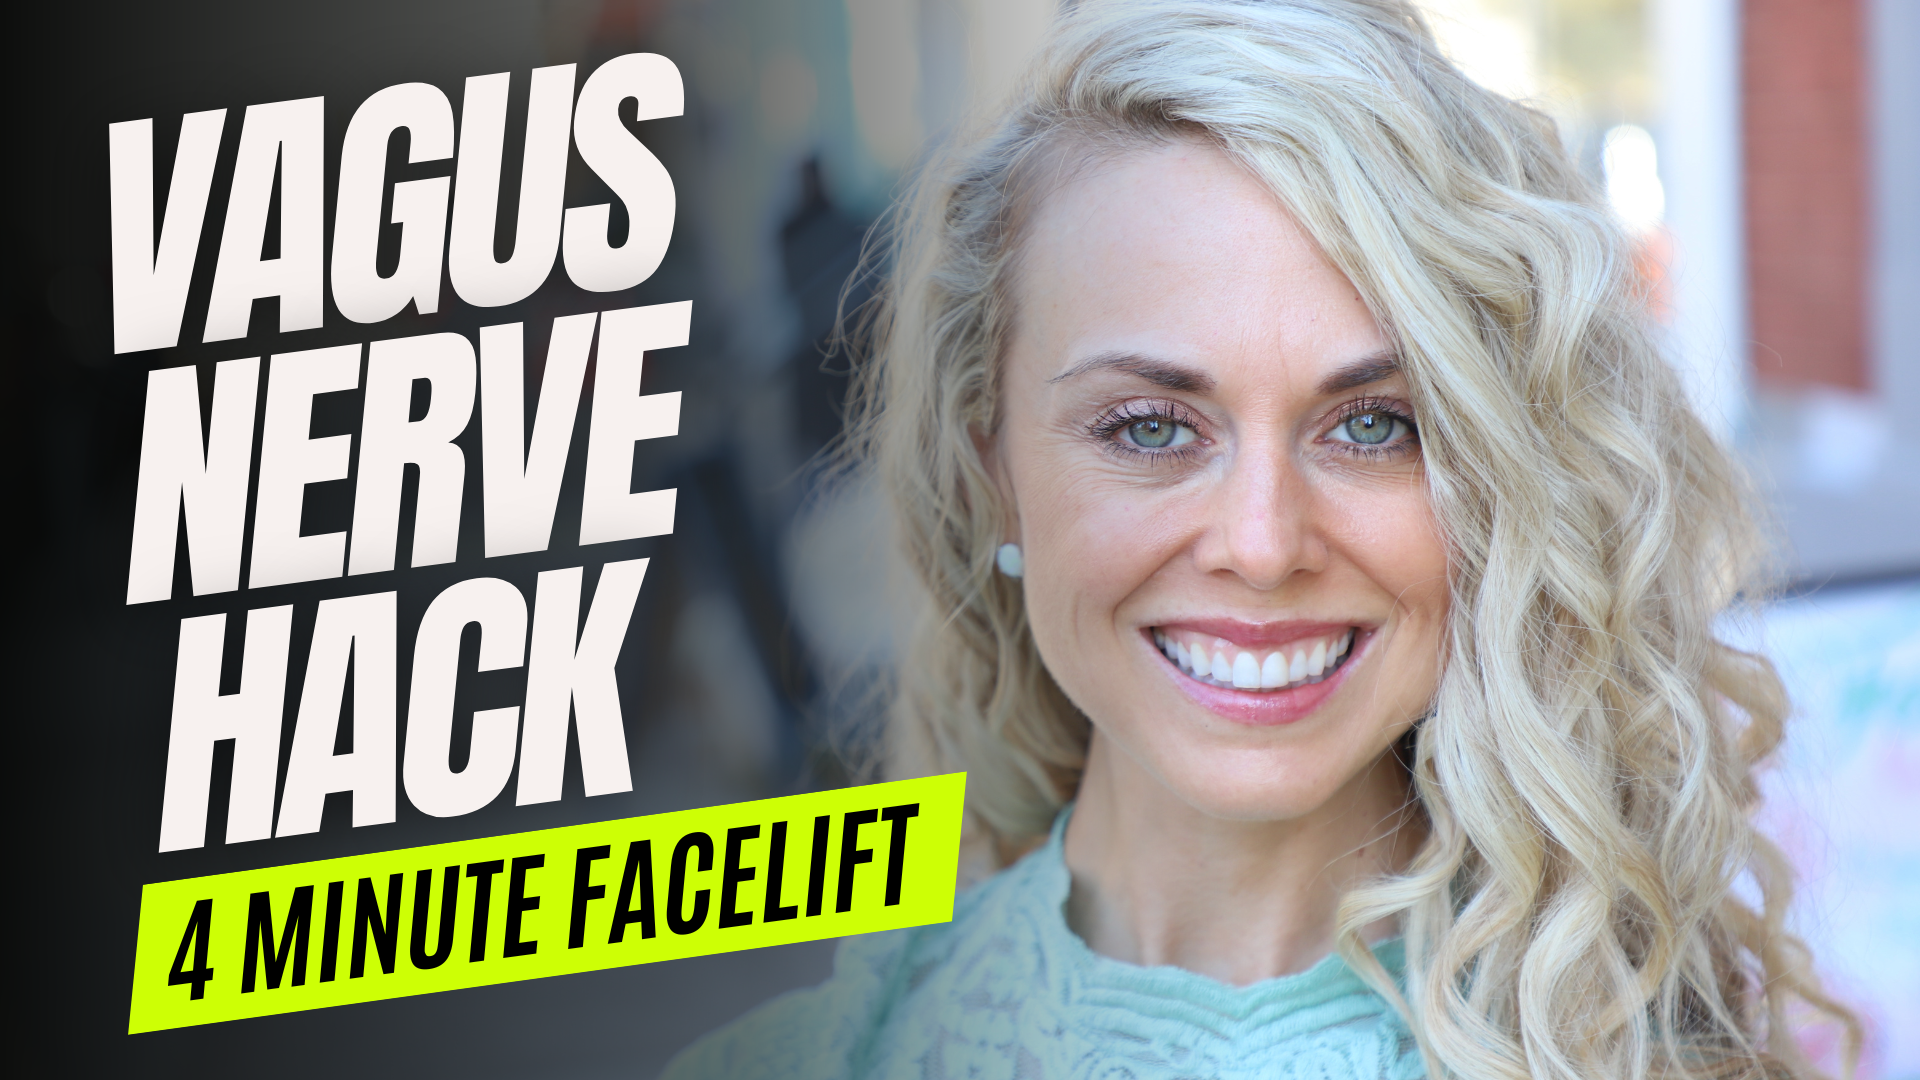 Vagus Nerve Hack | 4-minute Facelift